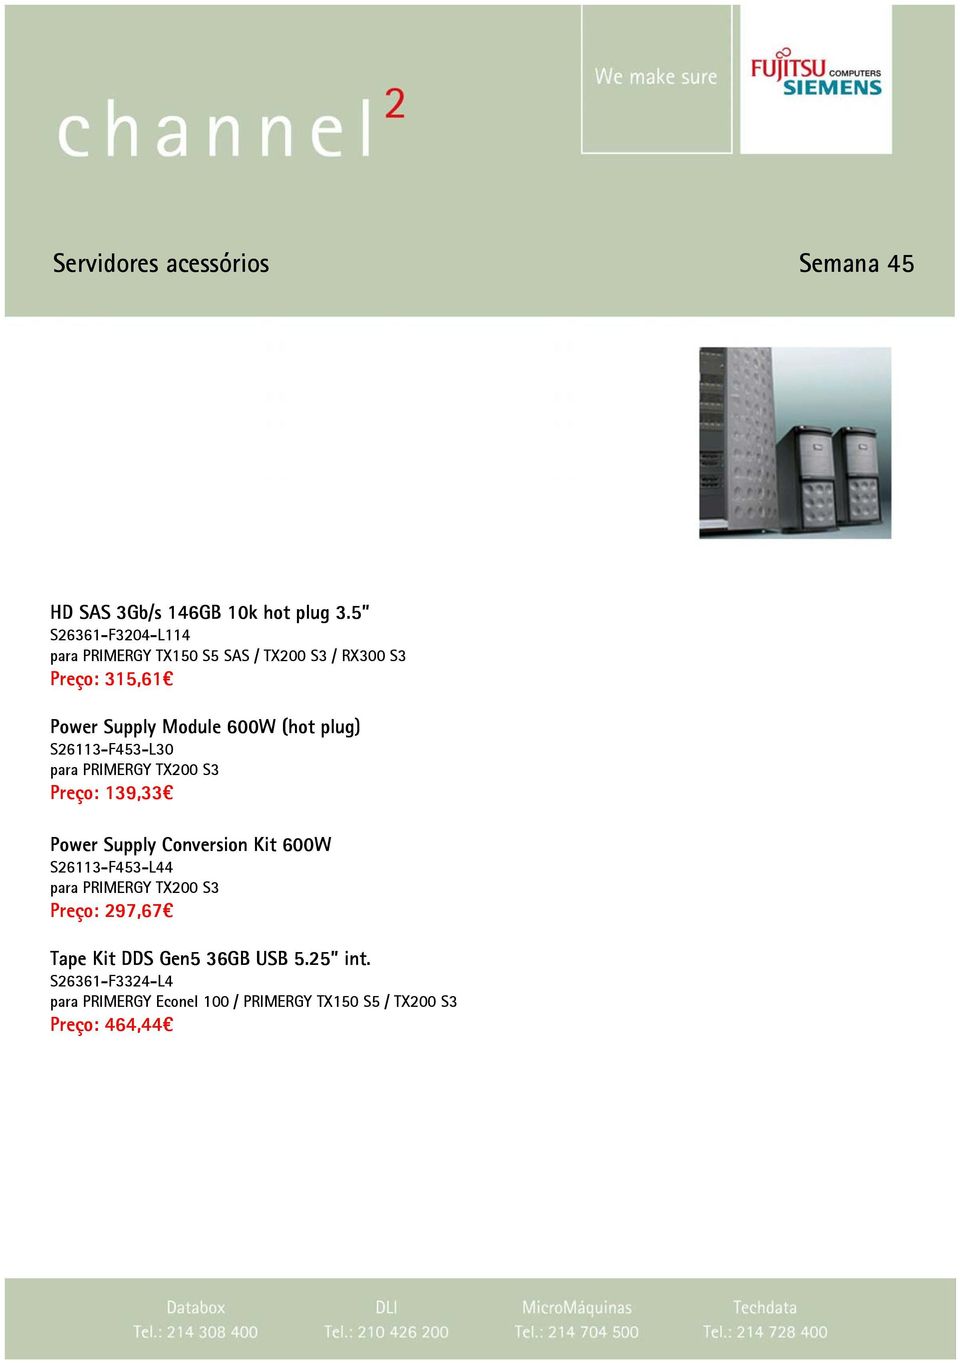 (hot plug) S26113-F453-L30 para PRIMERGY TX200 S3 Preço: 139,33 Power Supply Conversion Kit 600W